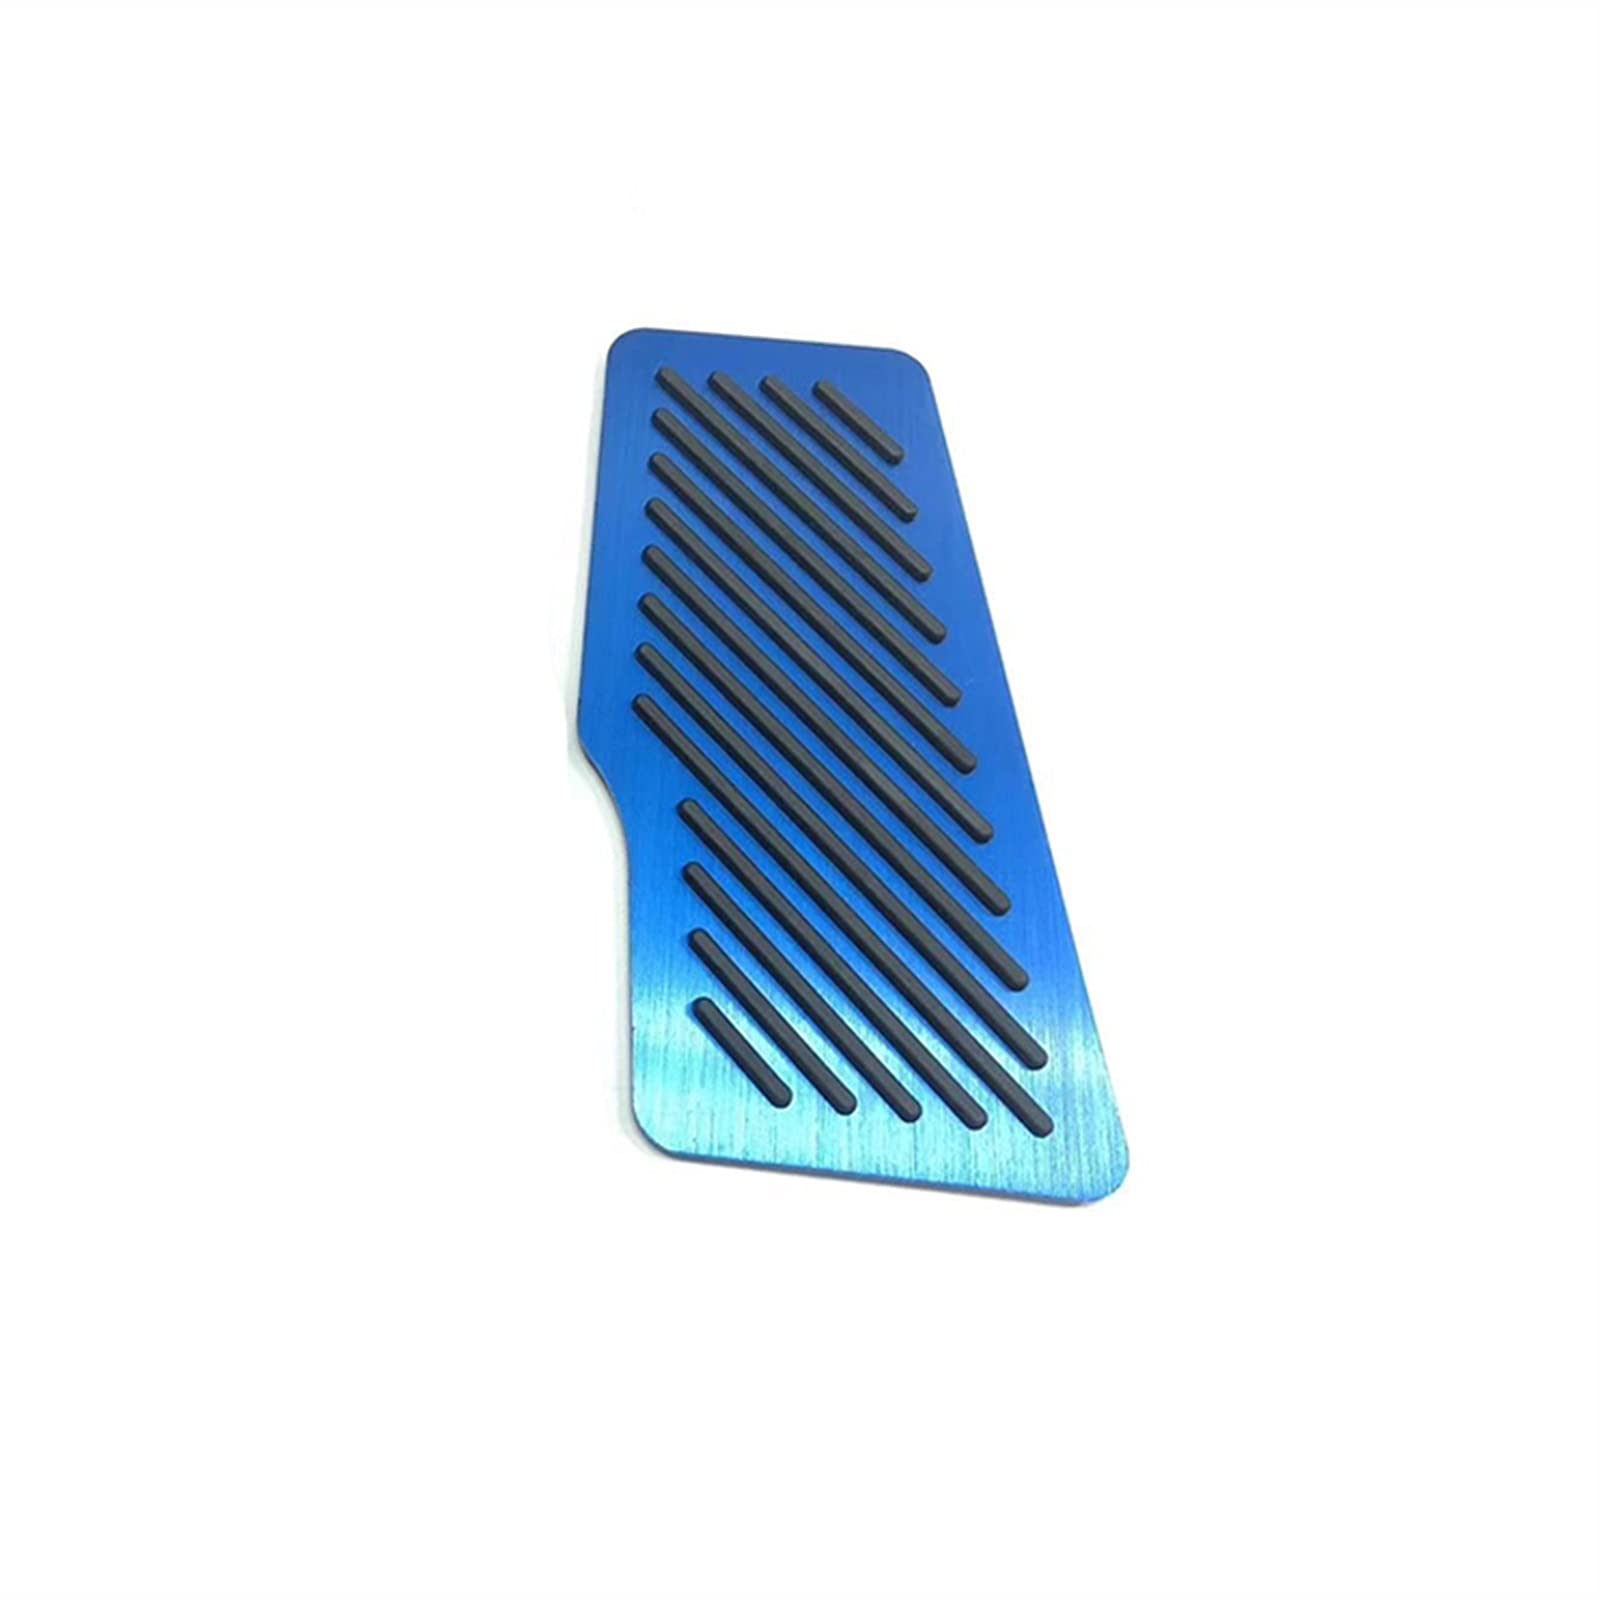 VLZUNO Aluminium Auto Gaspedal Kraftstoff Bremspedal Fußstütze Pedale Abdeckung rutschfeste Pads, for Toyota, for Camry XV70 2018 2019 2020 Auto-Fußpedale(Footrest Pedal Blue) von VLZUNO